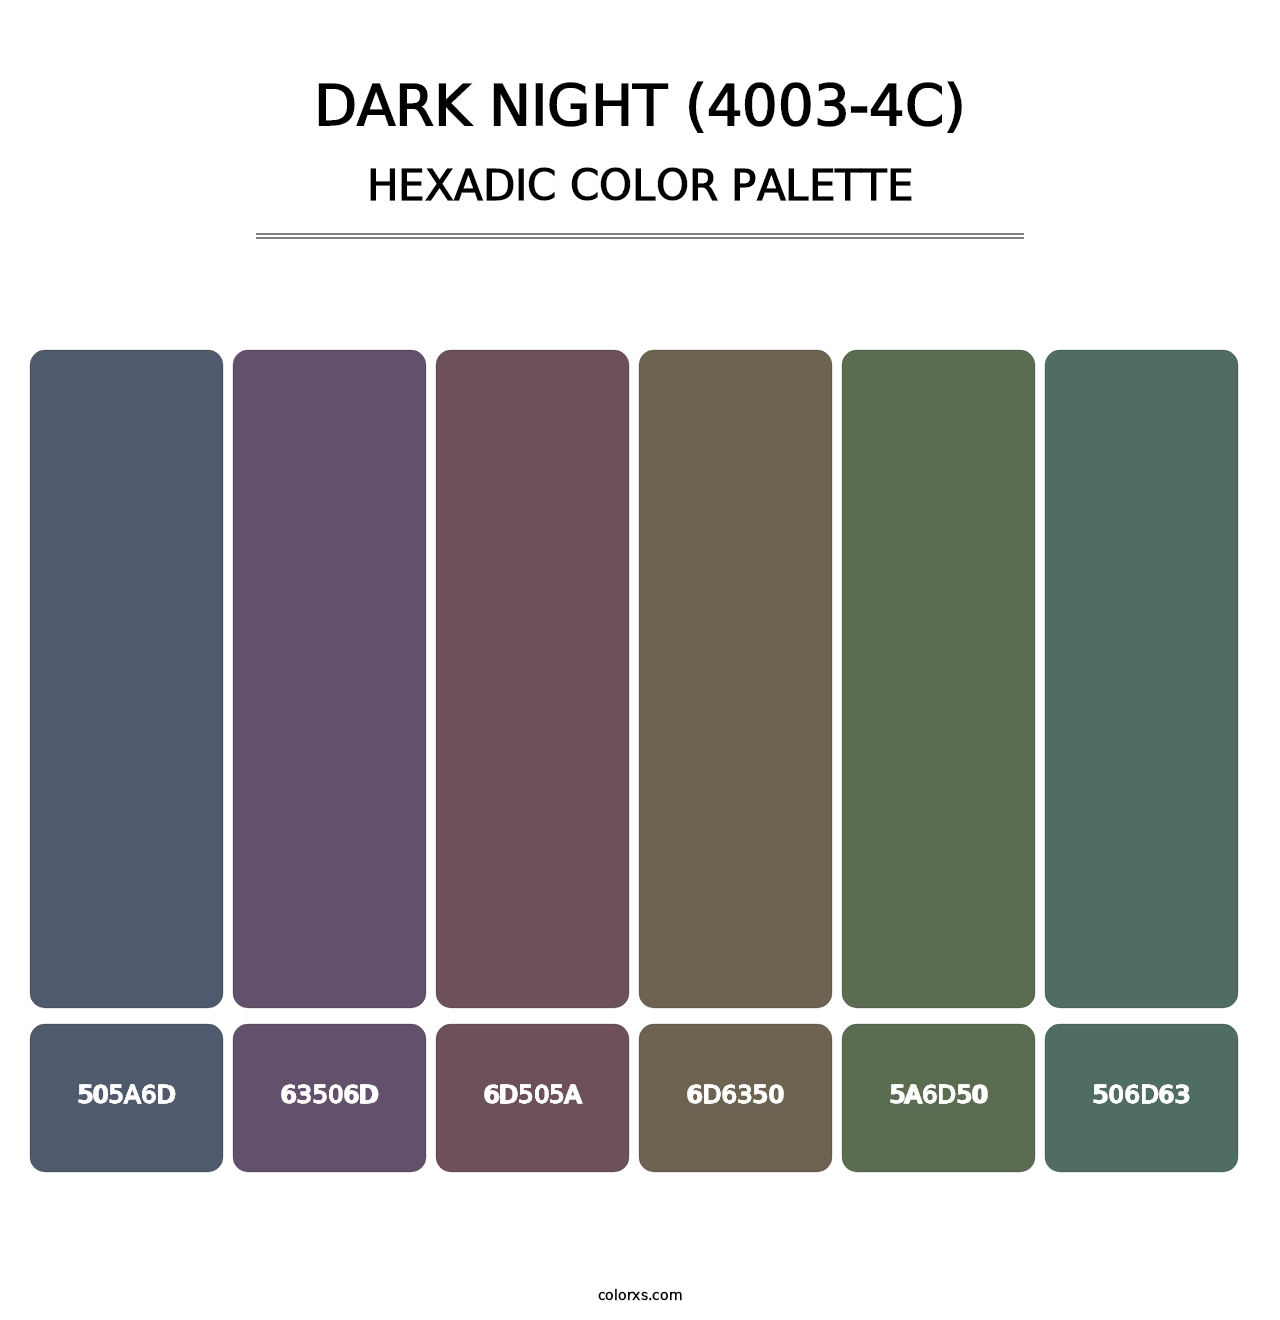 Dark Night (4003-4C) - Hexadic Color Palette